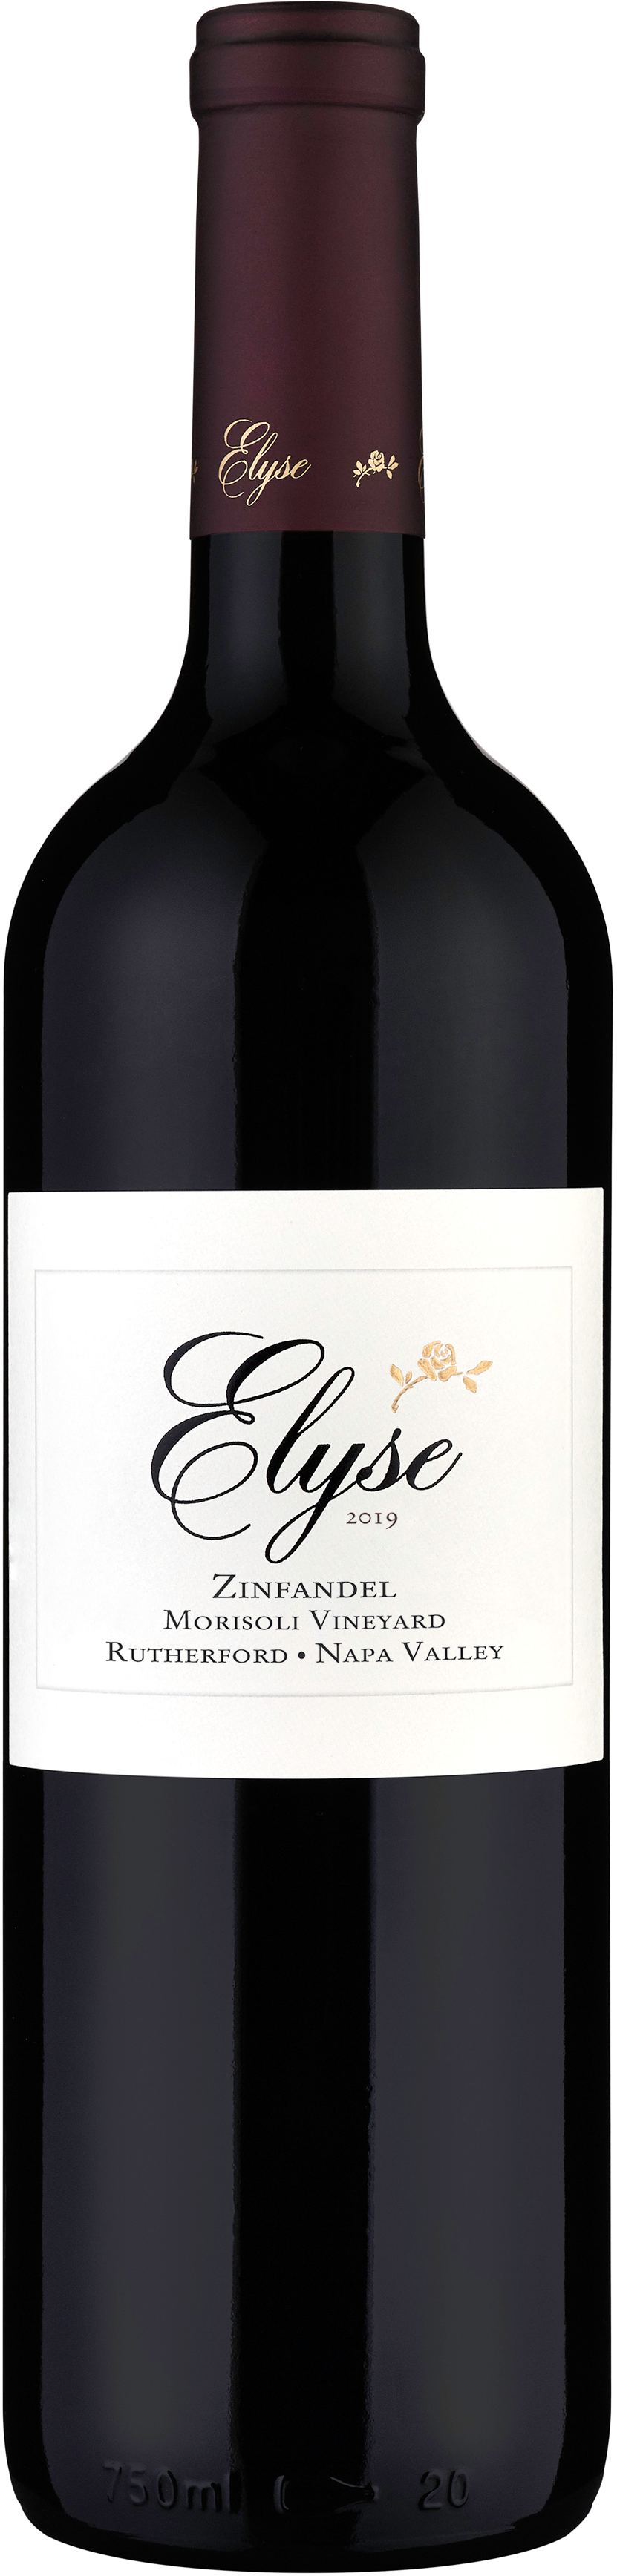 Elyse - Zinfandel Morisoli Vineyard 2019 (750)